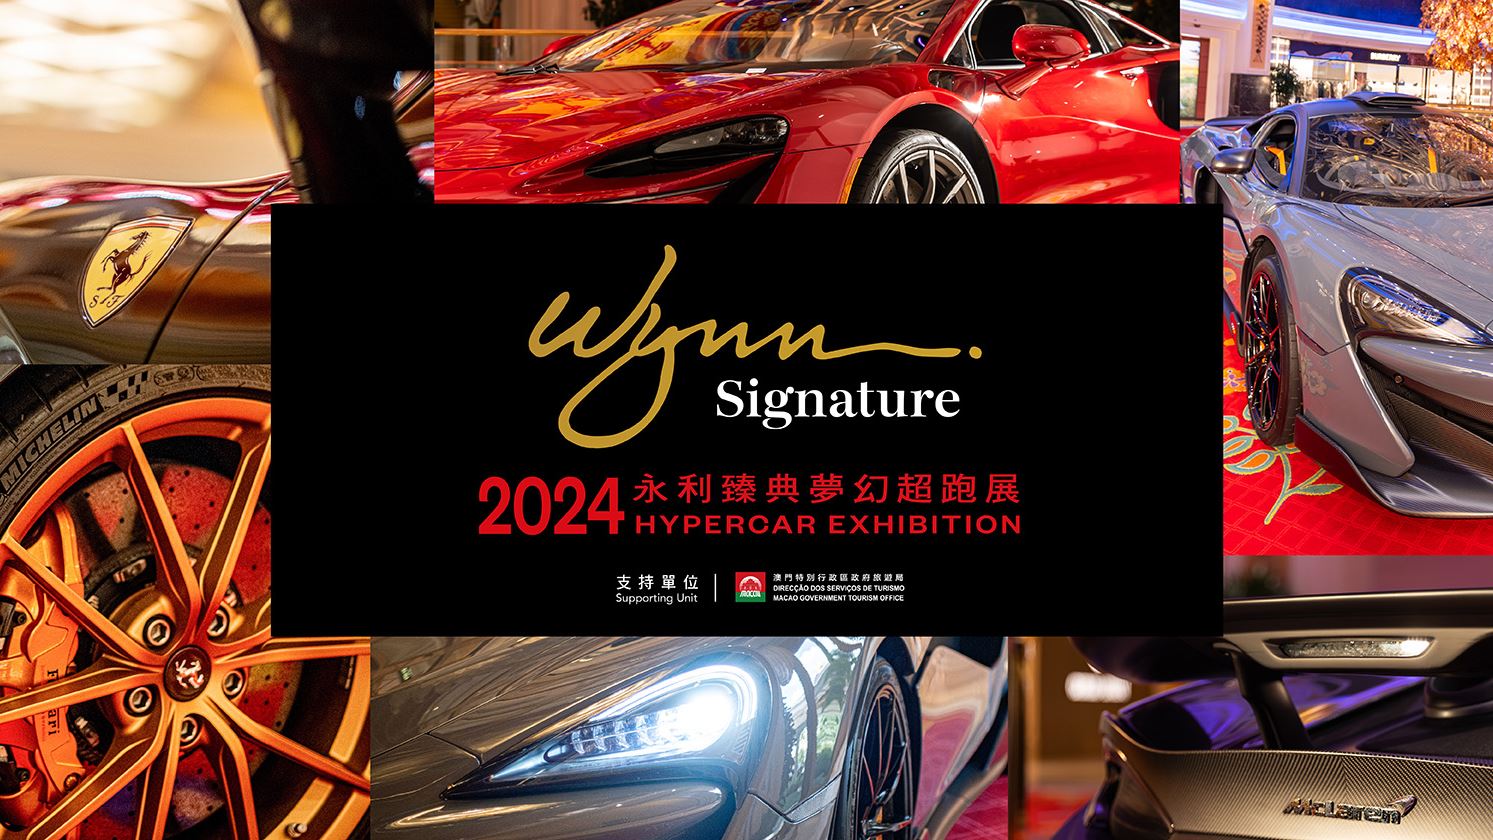 Wynn-Signature-2024-Hypercar-Exhibition.jpg